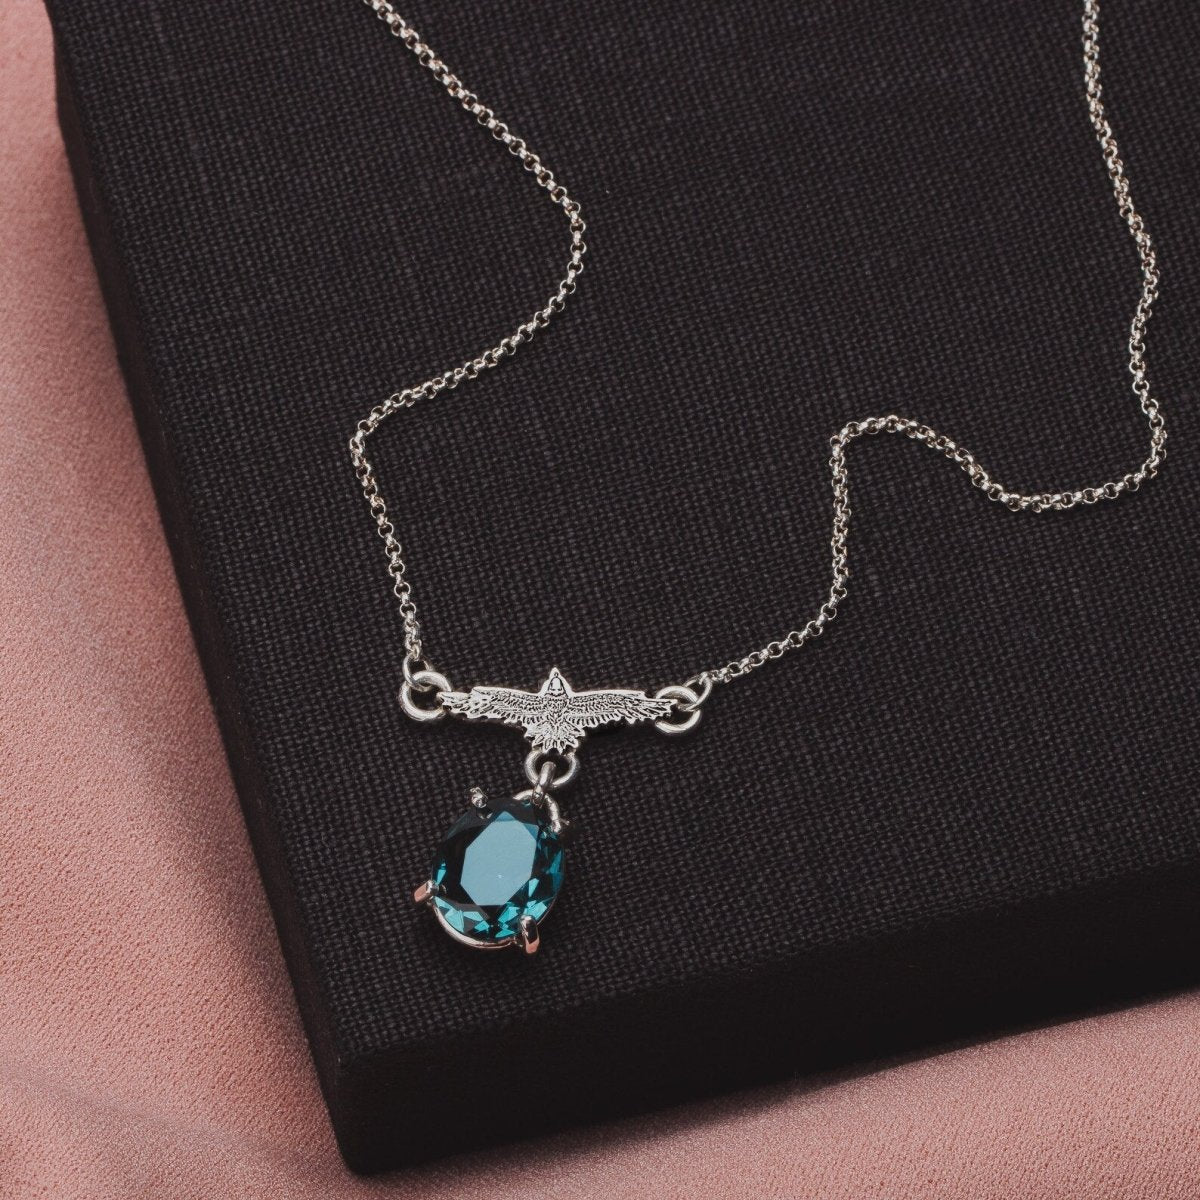 Gemstone Necklaces - Melanie Golden Jewelry